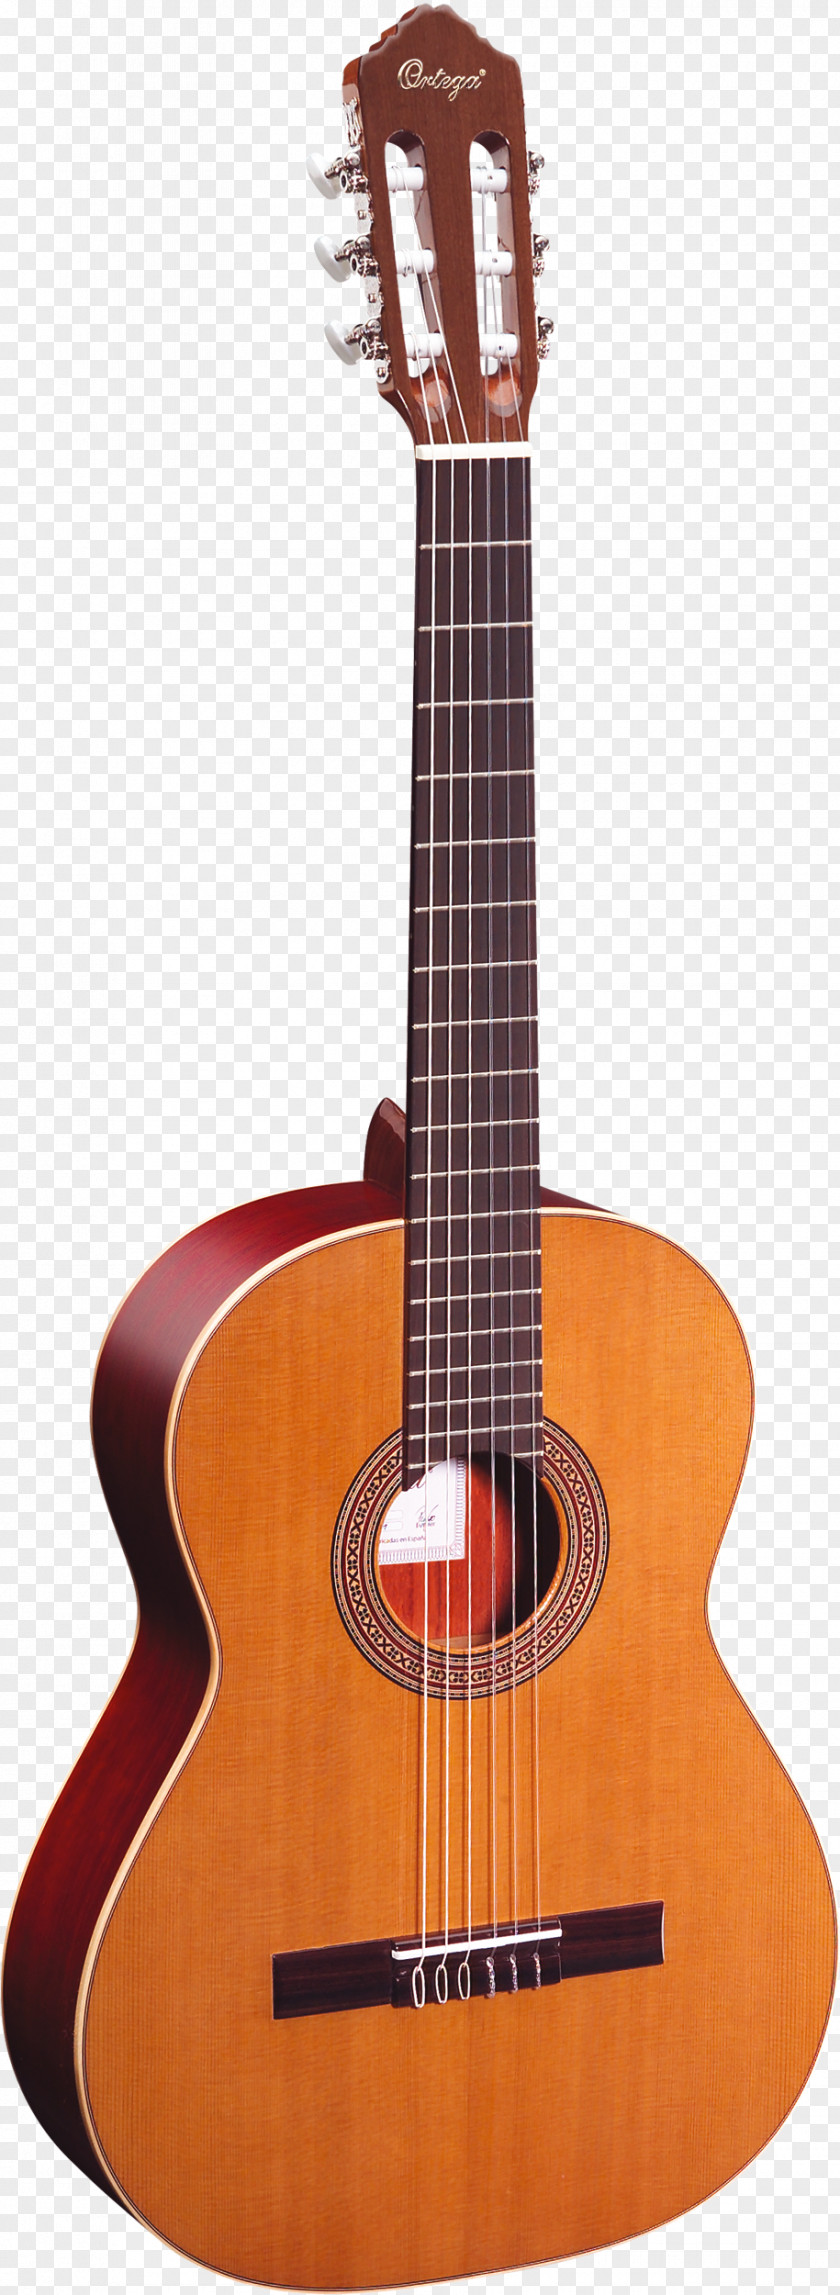 Amancio Ortega Acoustic-electric Guitar Classical Steel-string Acoustic PNG